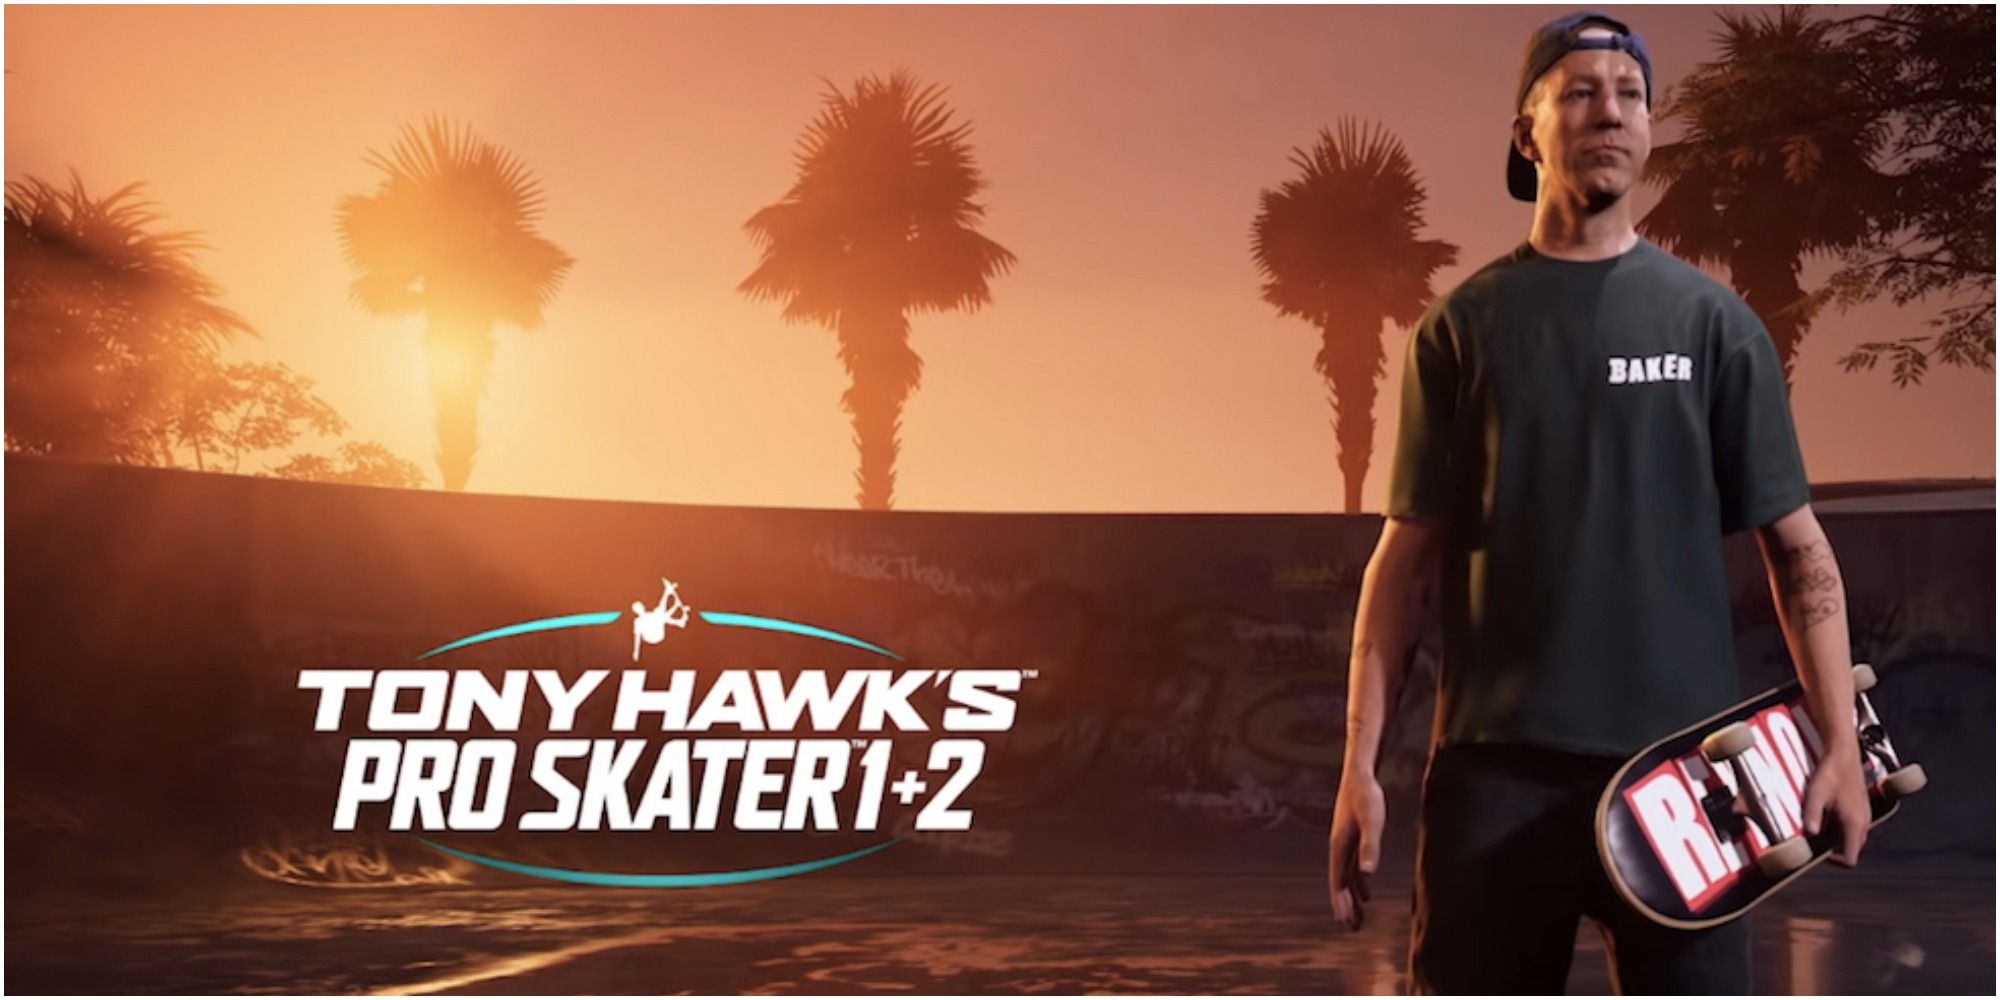 Tony Hawk Pro Skater 3 & 4 remasters were planned according to Tony Hawk